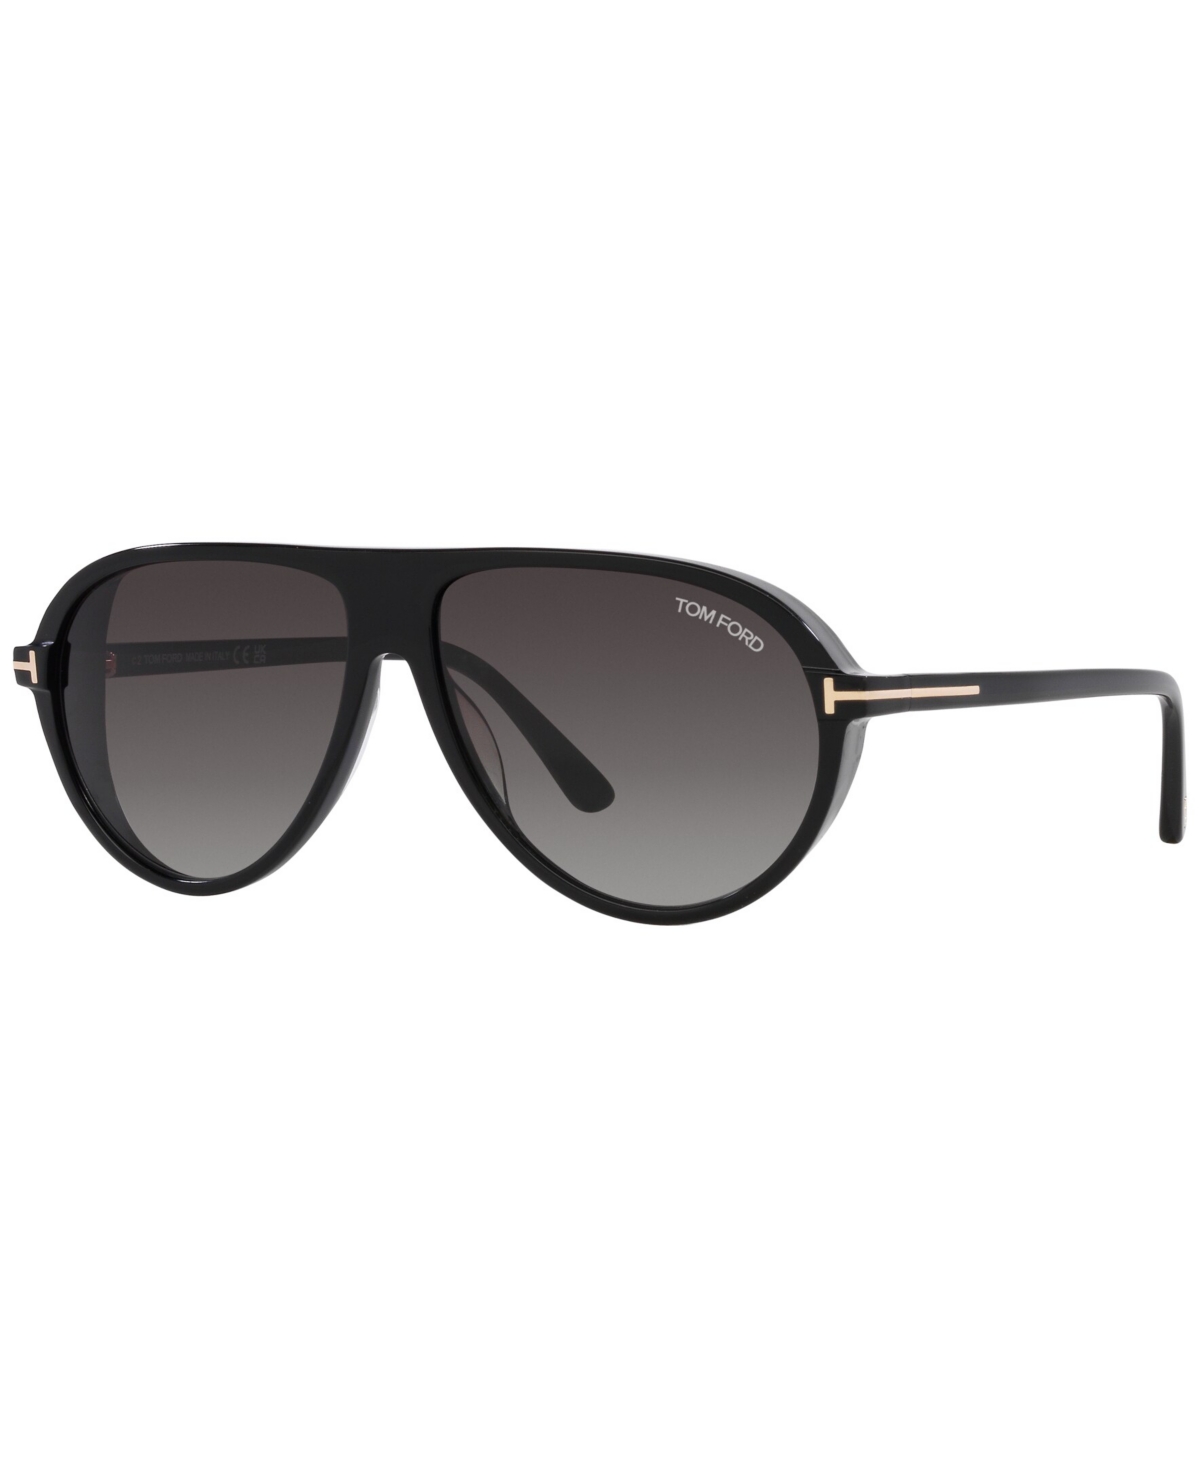 Tom Ford Men's Sunglasses, Marcus In Shiny Black